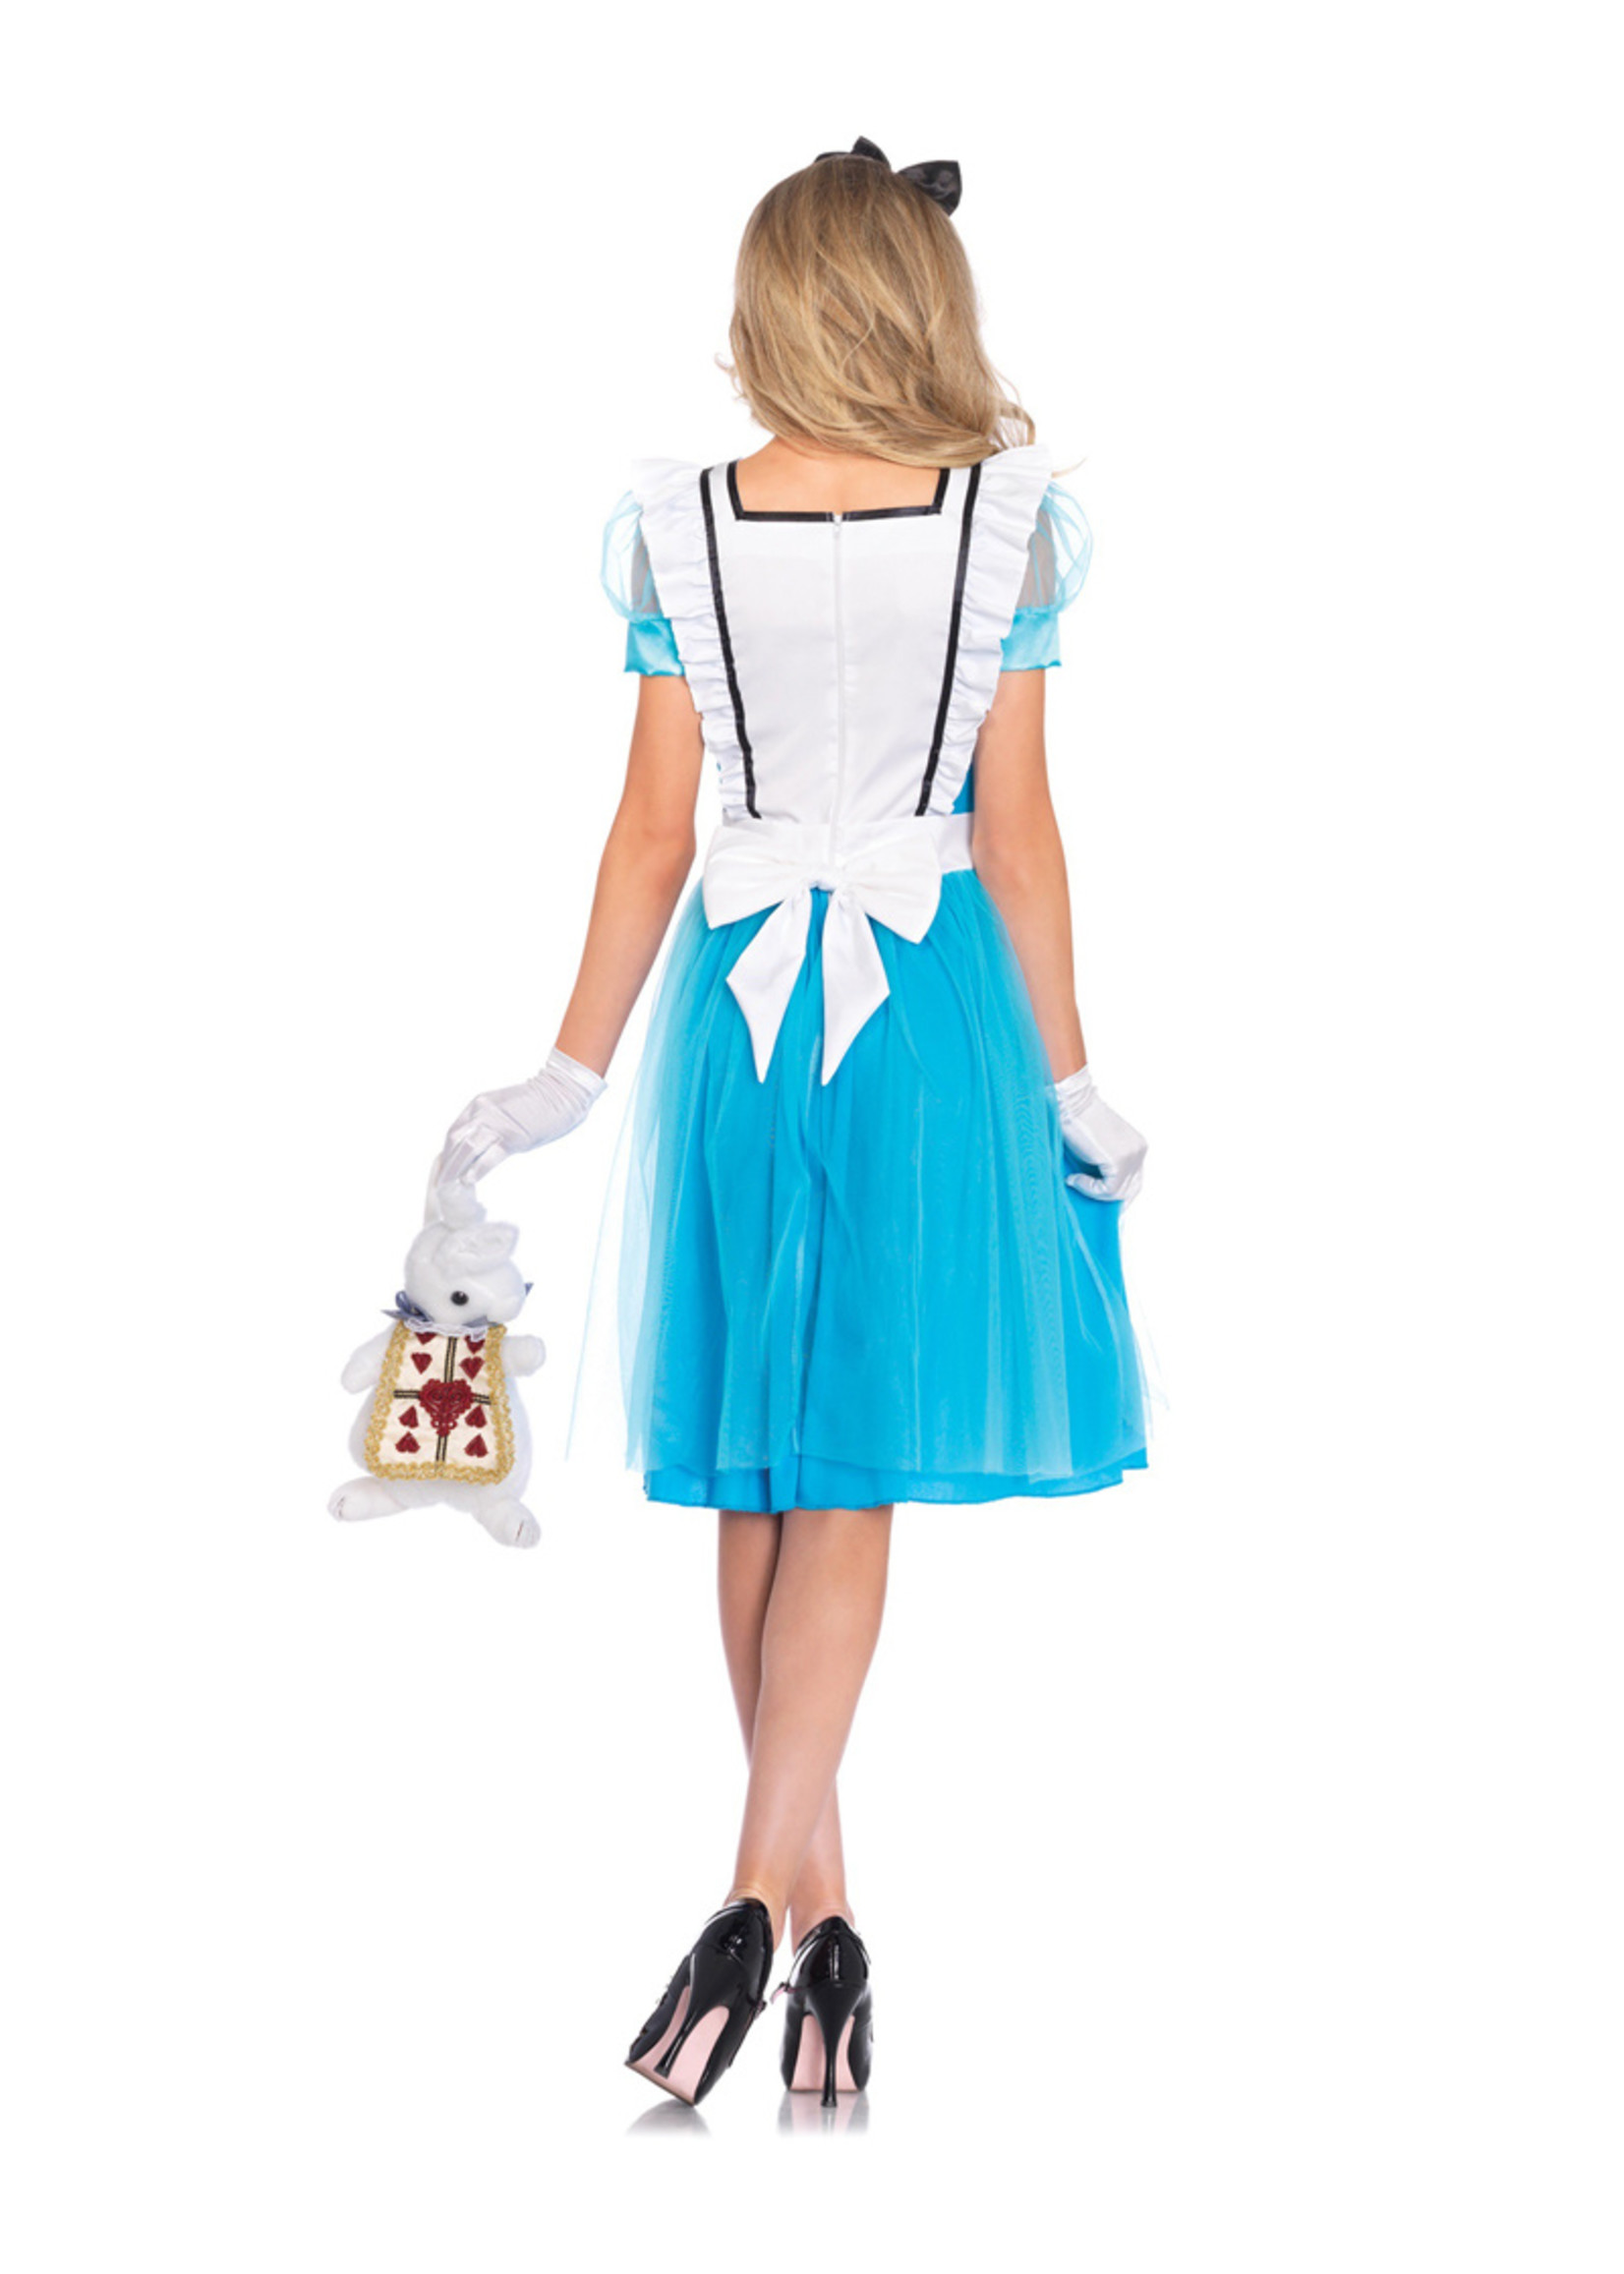 LEG AVENUE Classic Alice Costume - Women's